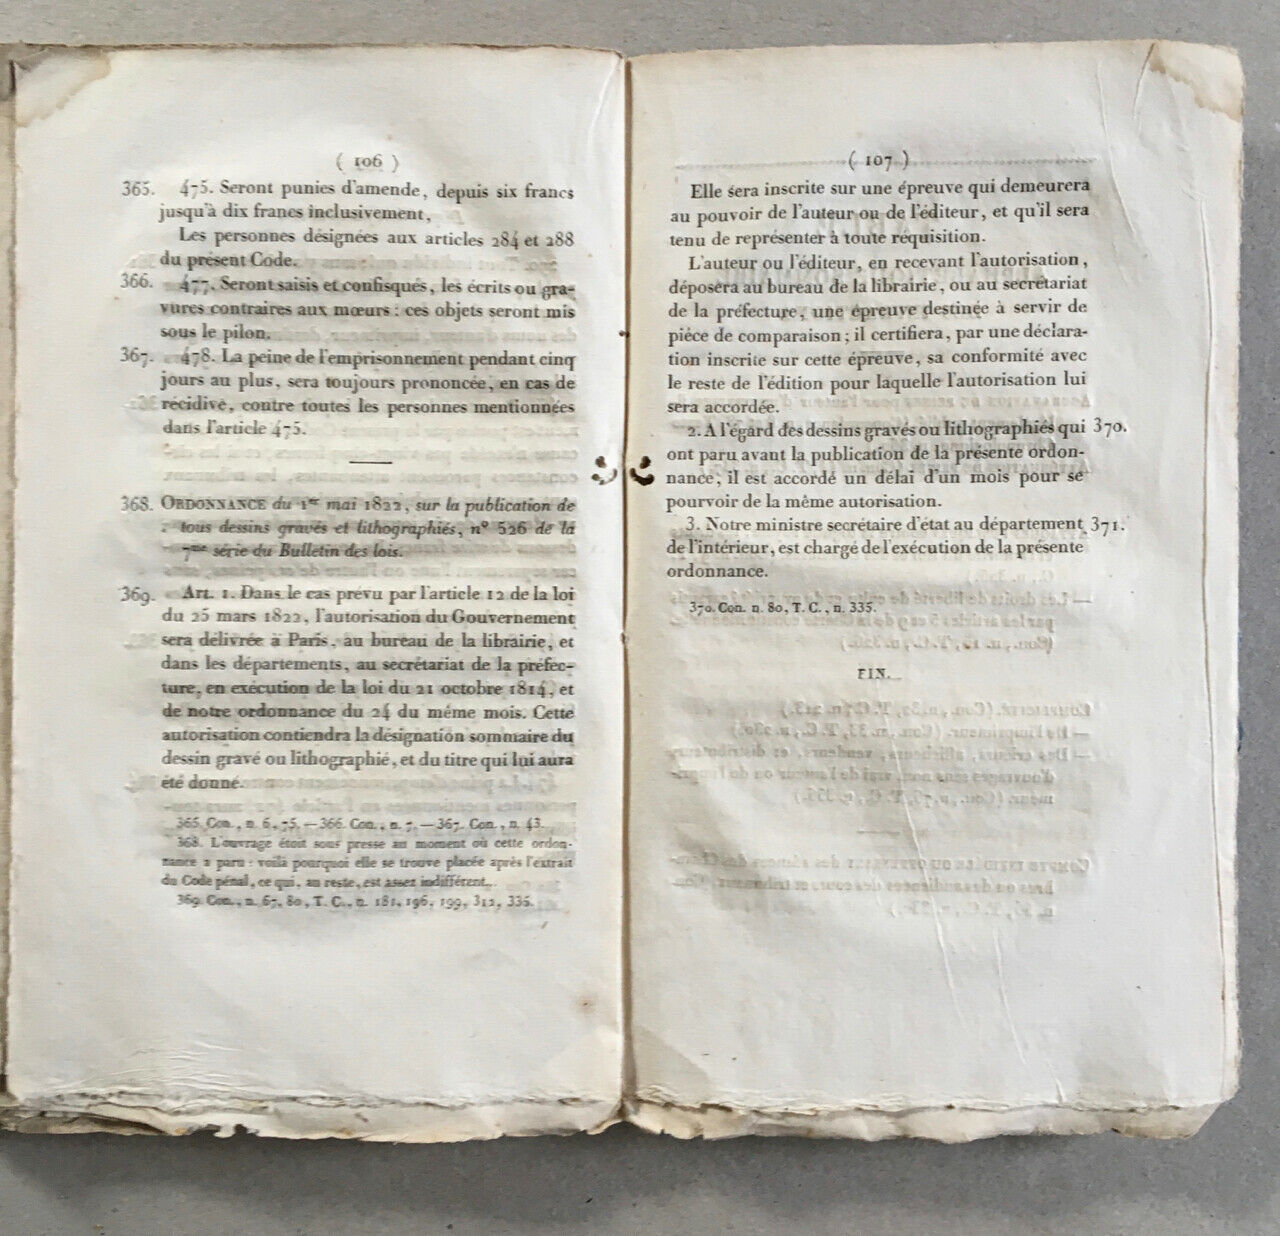 Berny's ECG — Concordance of press laws — o.e. — Didot — 1822.